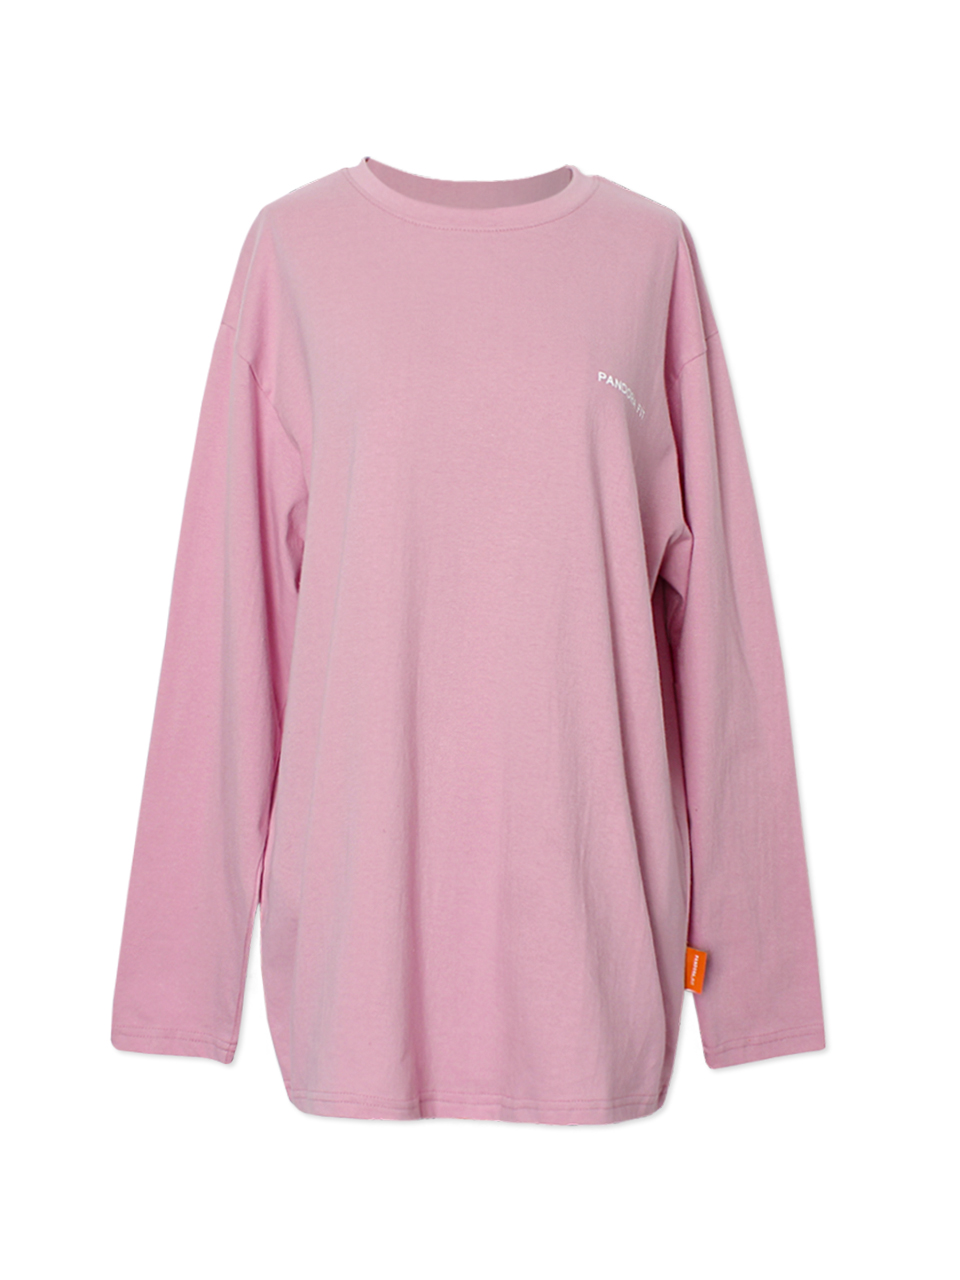 Essential T-Shirt Pink